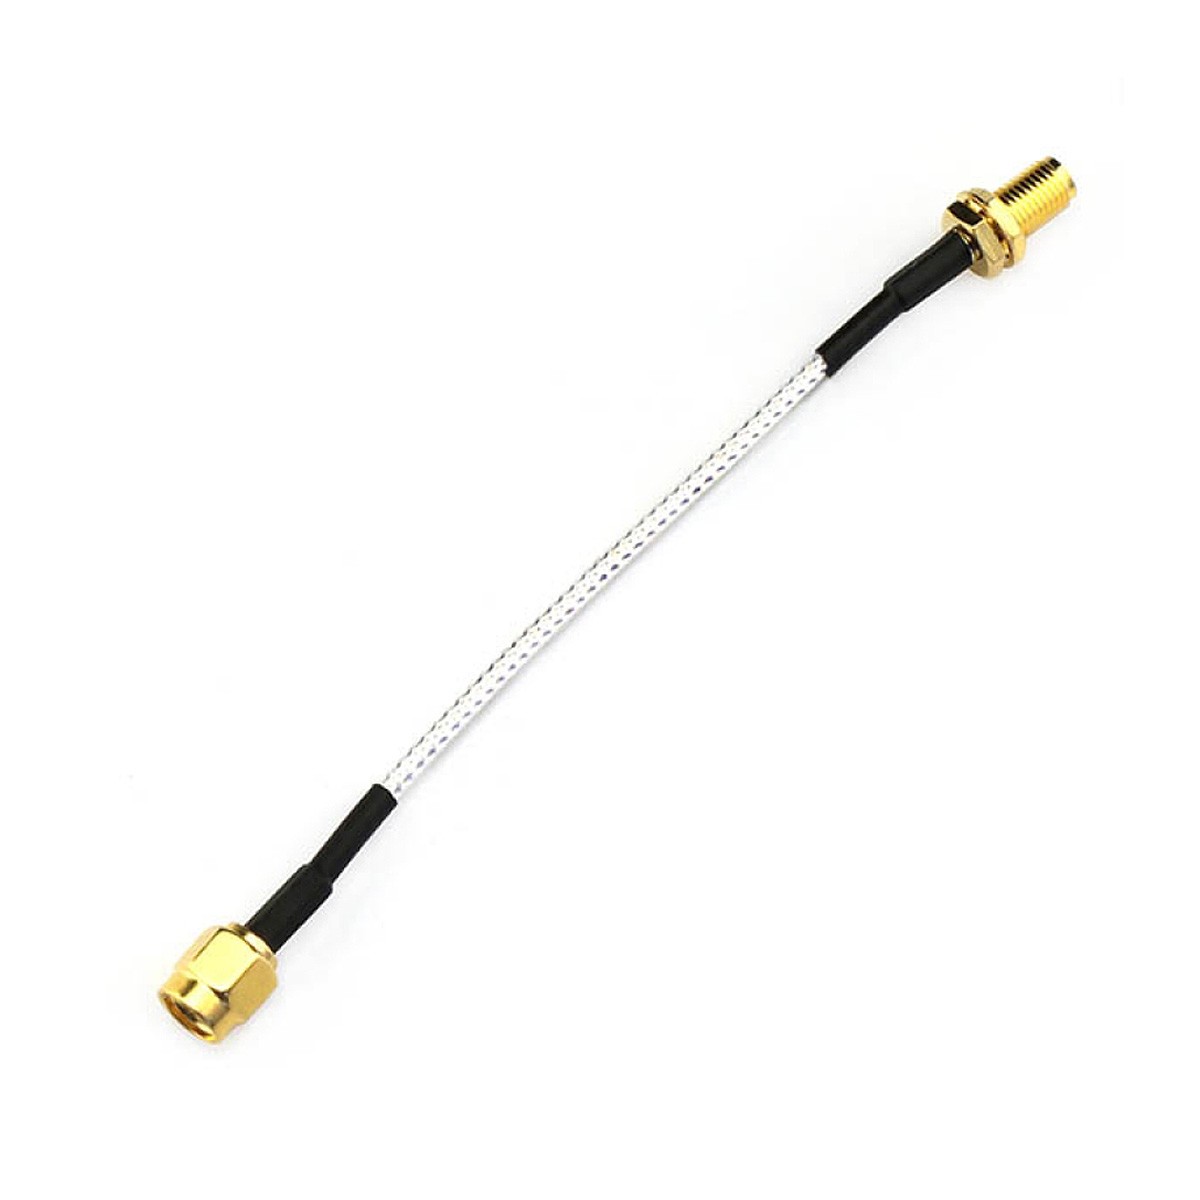 TINYSINE SMA-MF Male SMA to Female SMA Antenna Cable 10cm